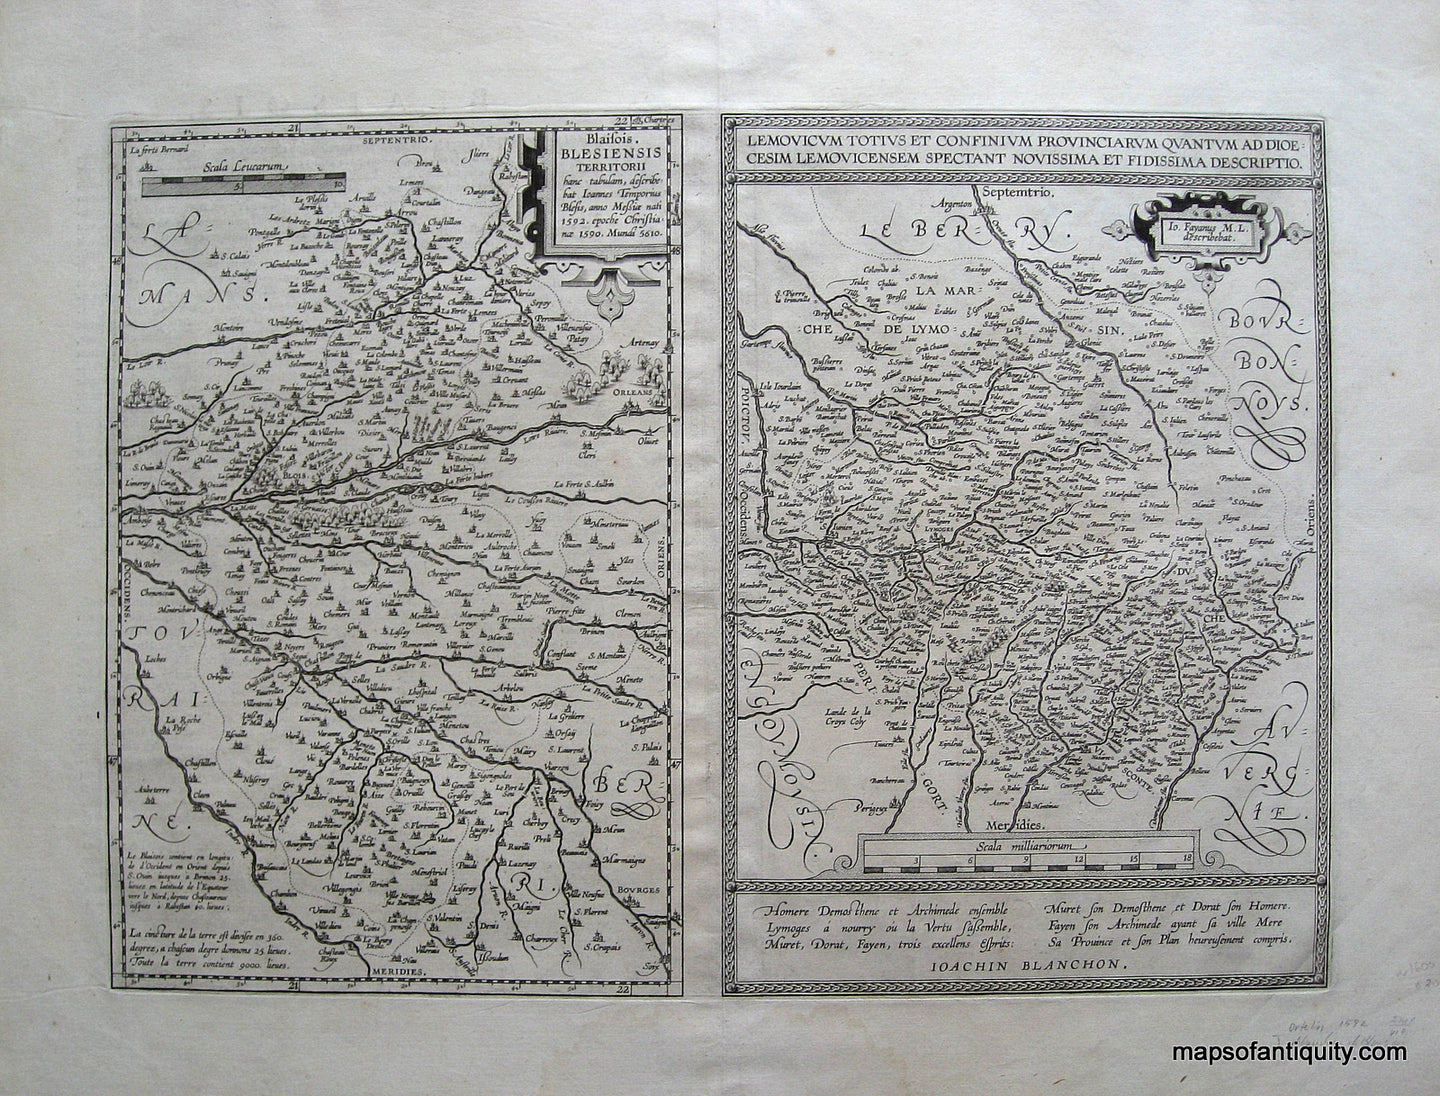 Antique-Black-and-White-Engraved-Map-Blaisois.-Blesiensis-Territorii-Lemouicum-France-Regions-France--1592-Ortelius-Maps-Of-Antiquity